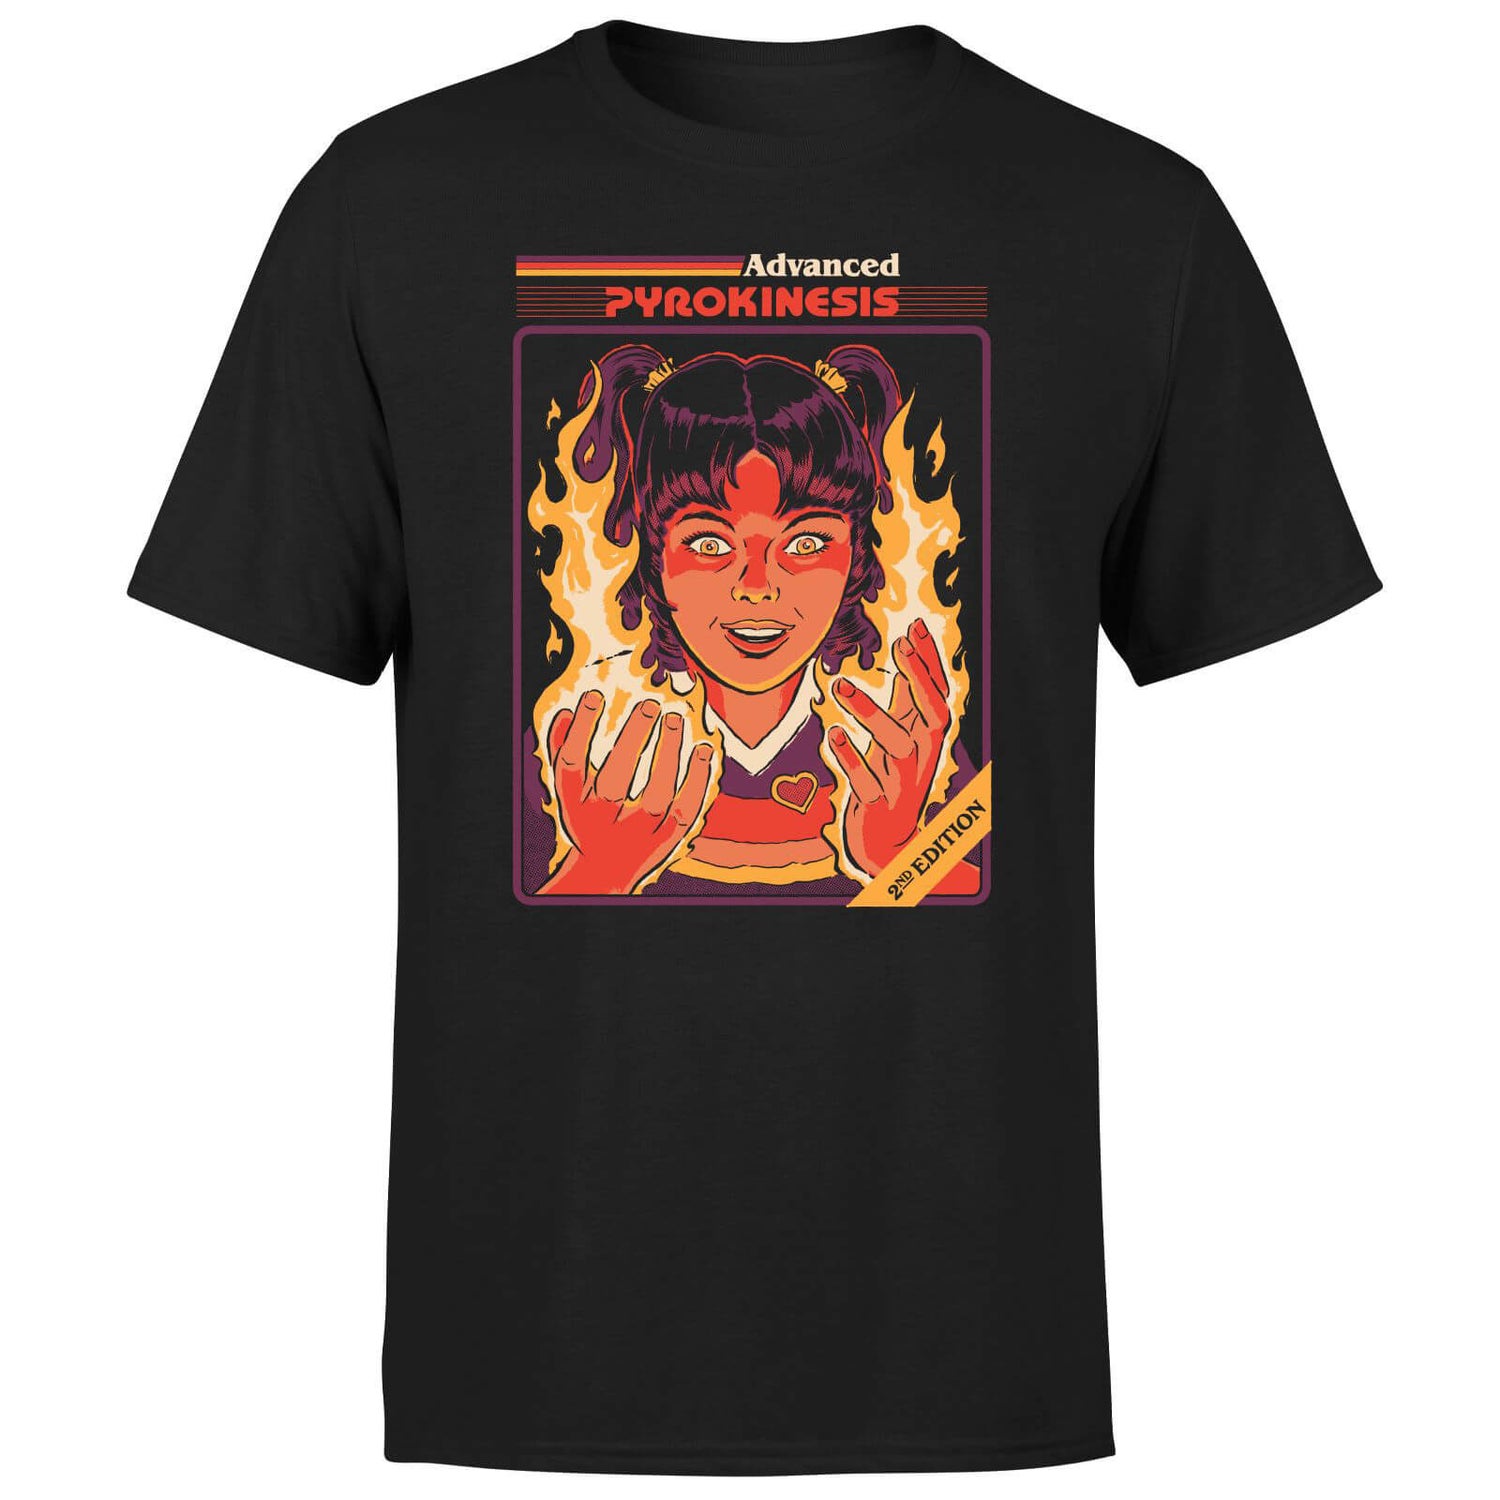 Advanced Pyrokinesis Men's T-Shirt - Black